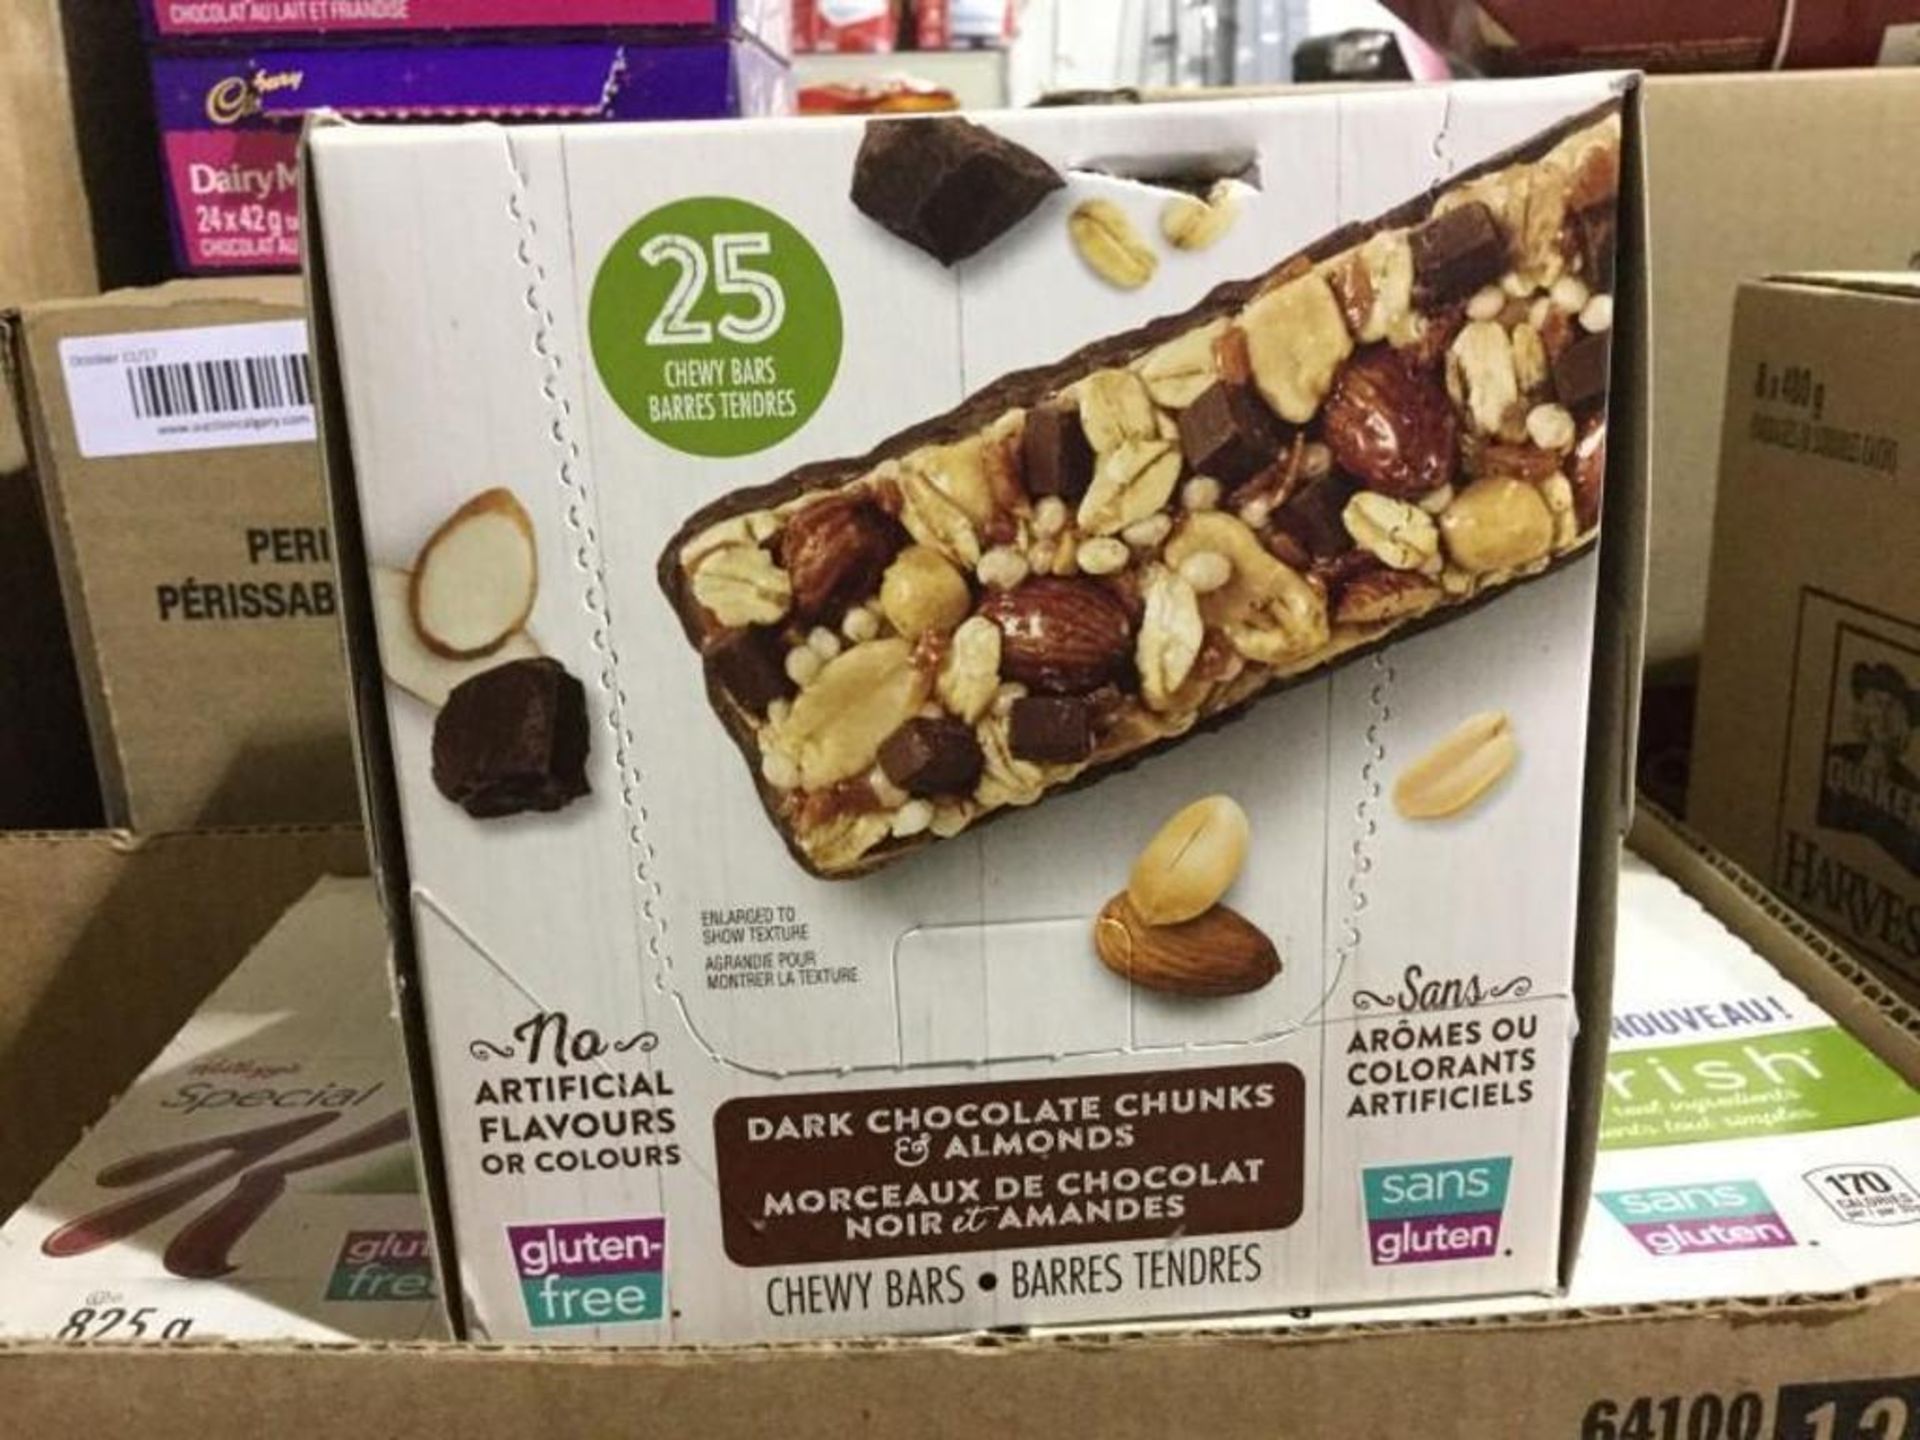 Case of Special K Nourish Dark Chocolate Chunks & Almonds Bars